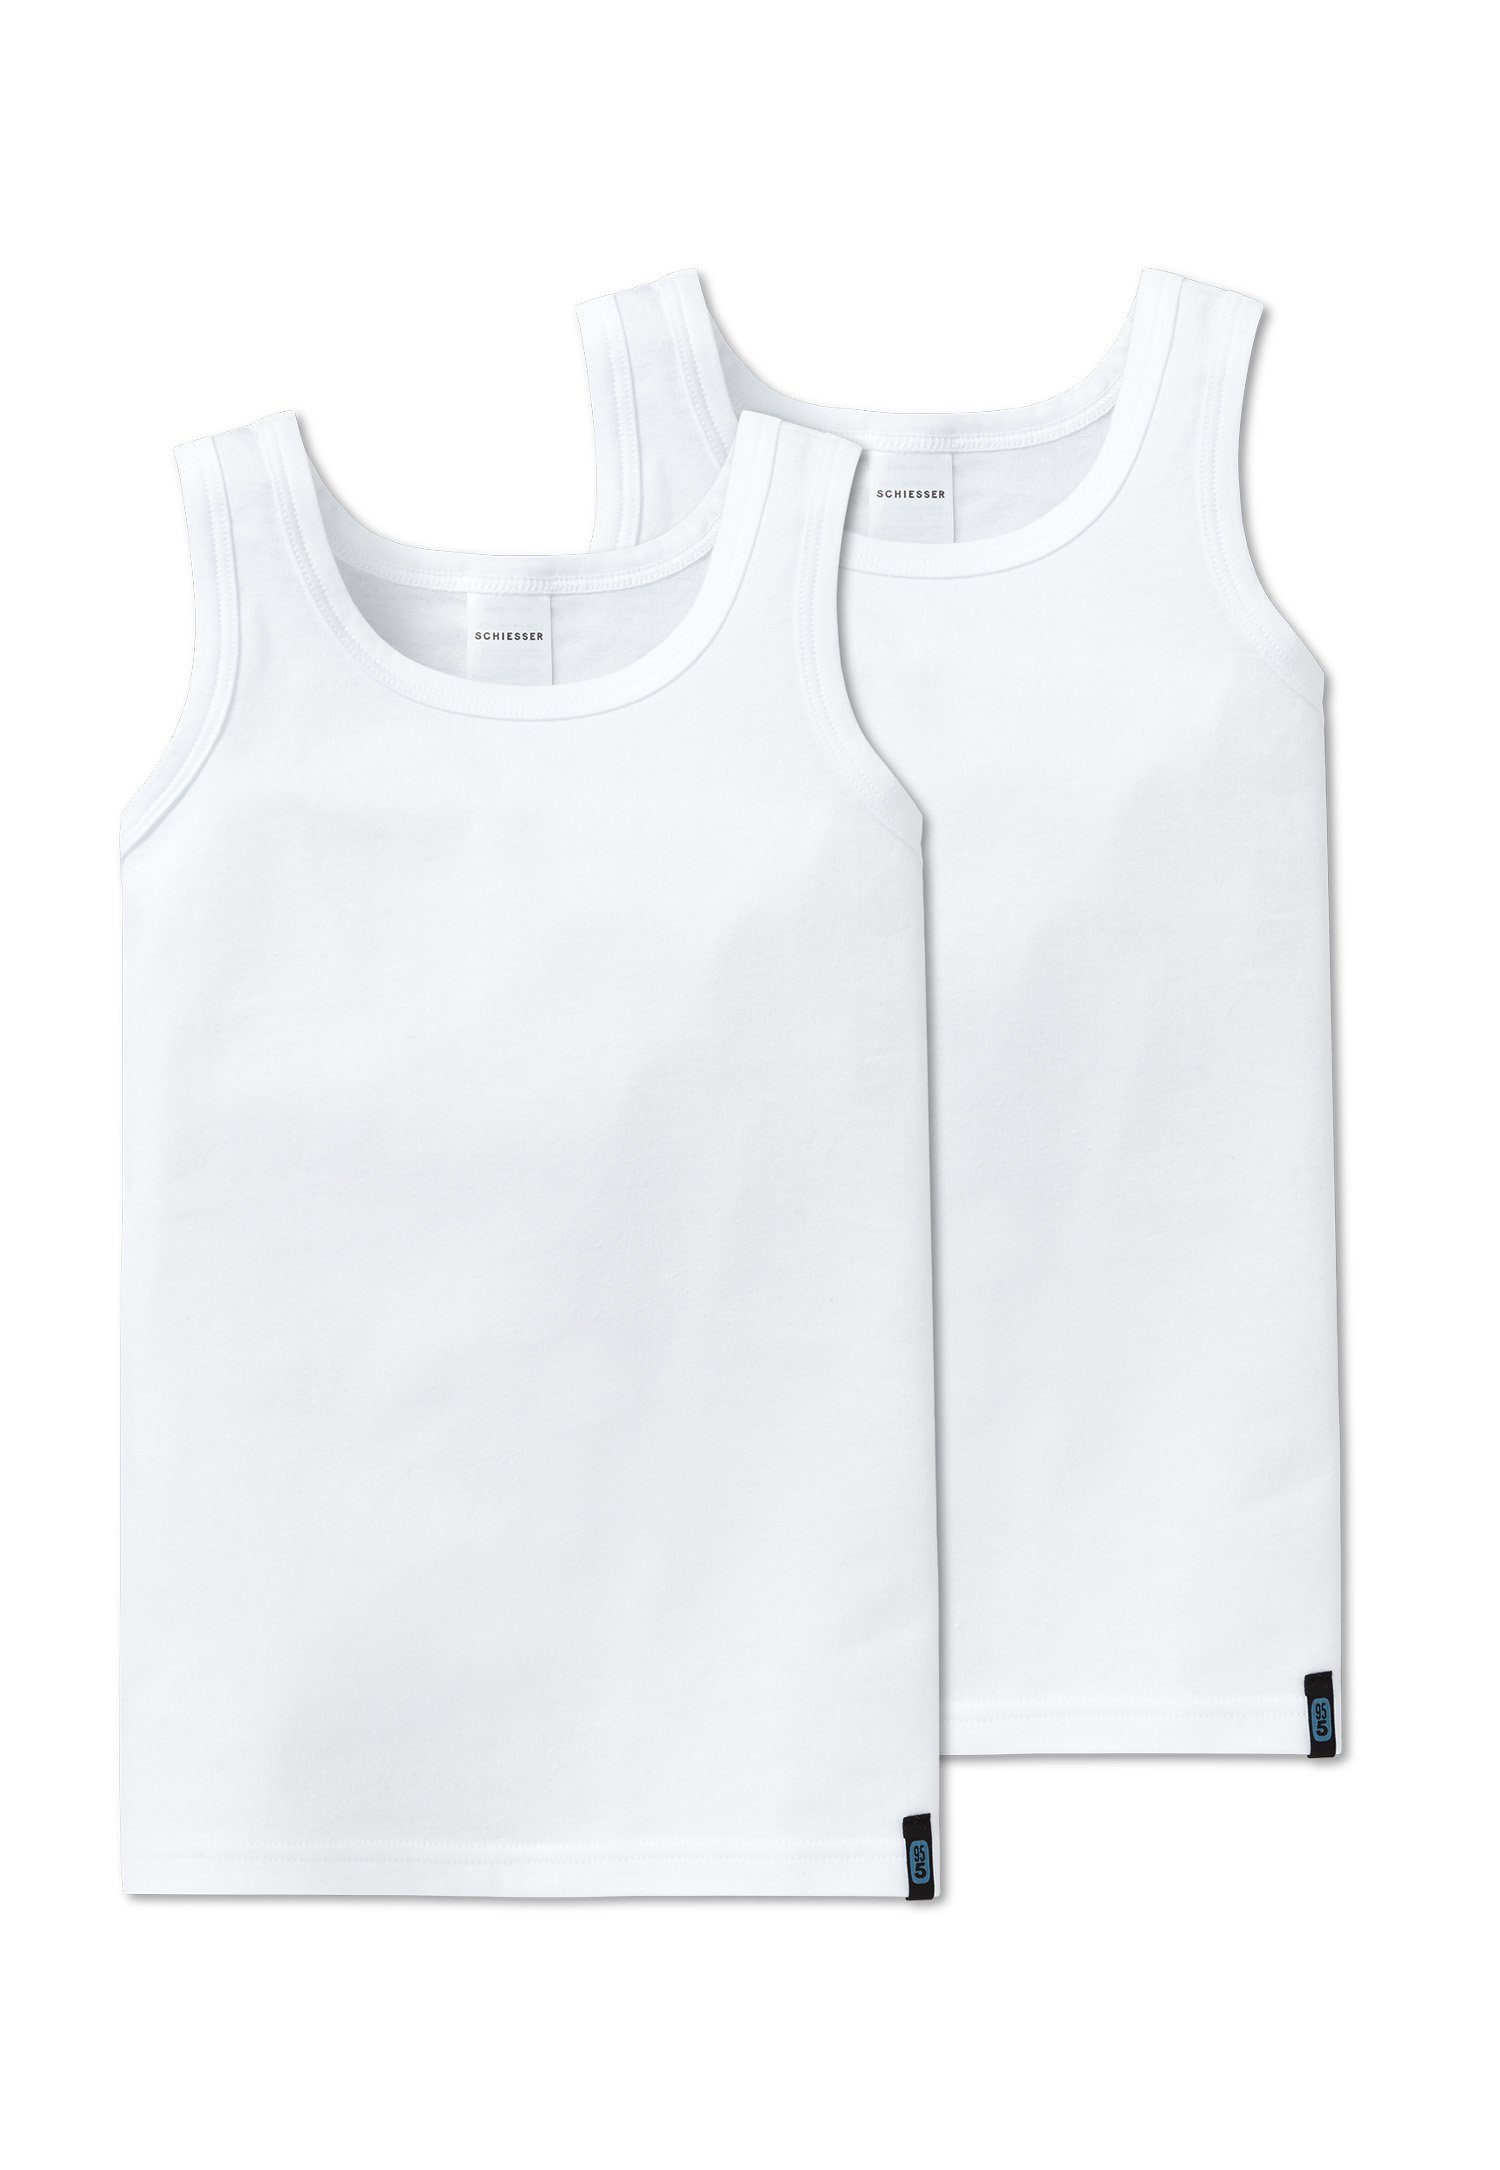 Schiesser Unterhemd Cotton 95/5 (Set, 2-St., 2er-Pack) Jungen Unterhemd, Tank Top, Baumwolle